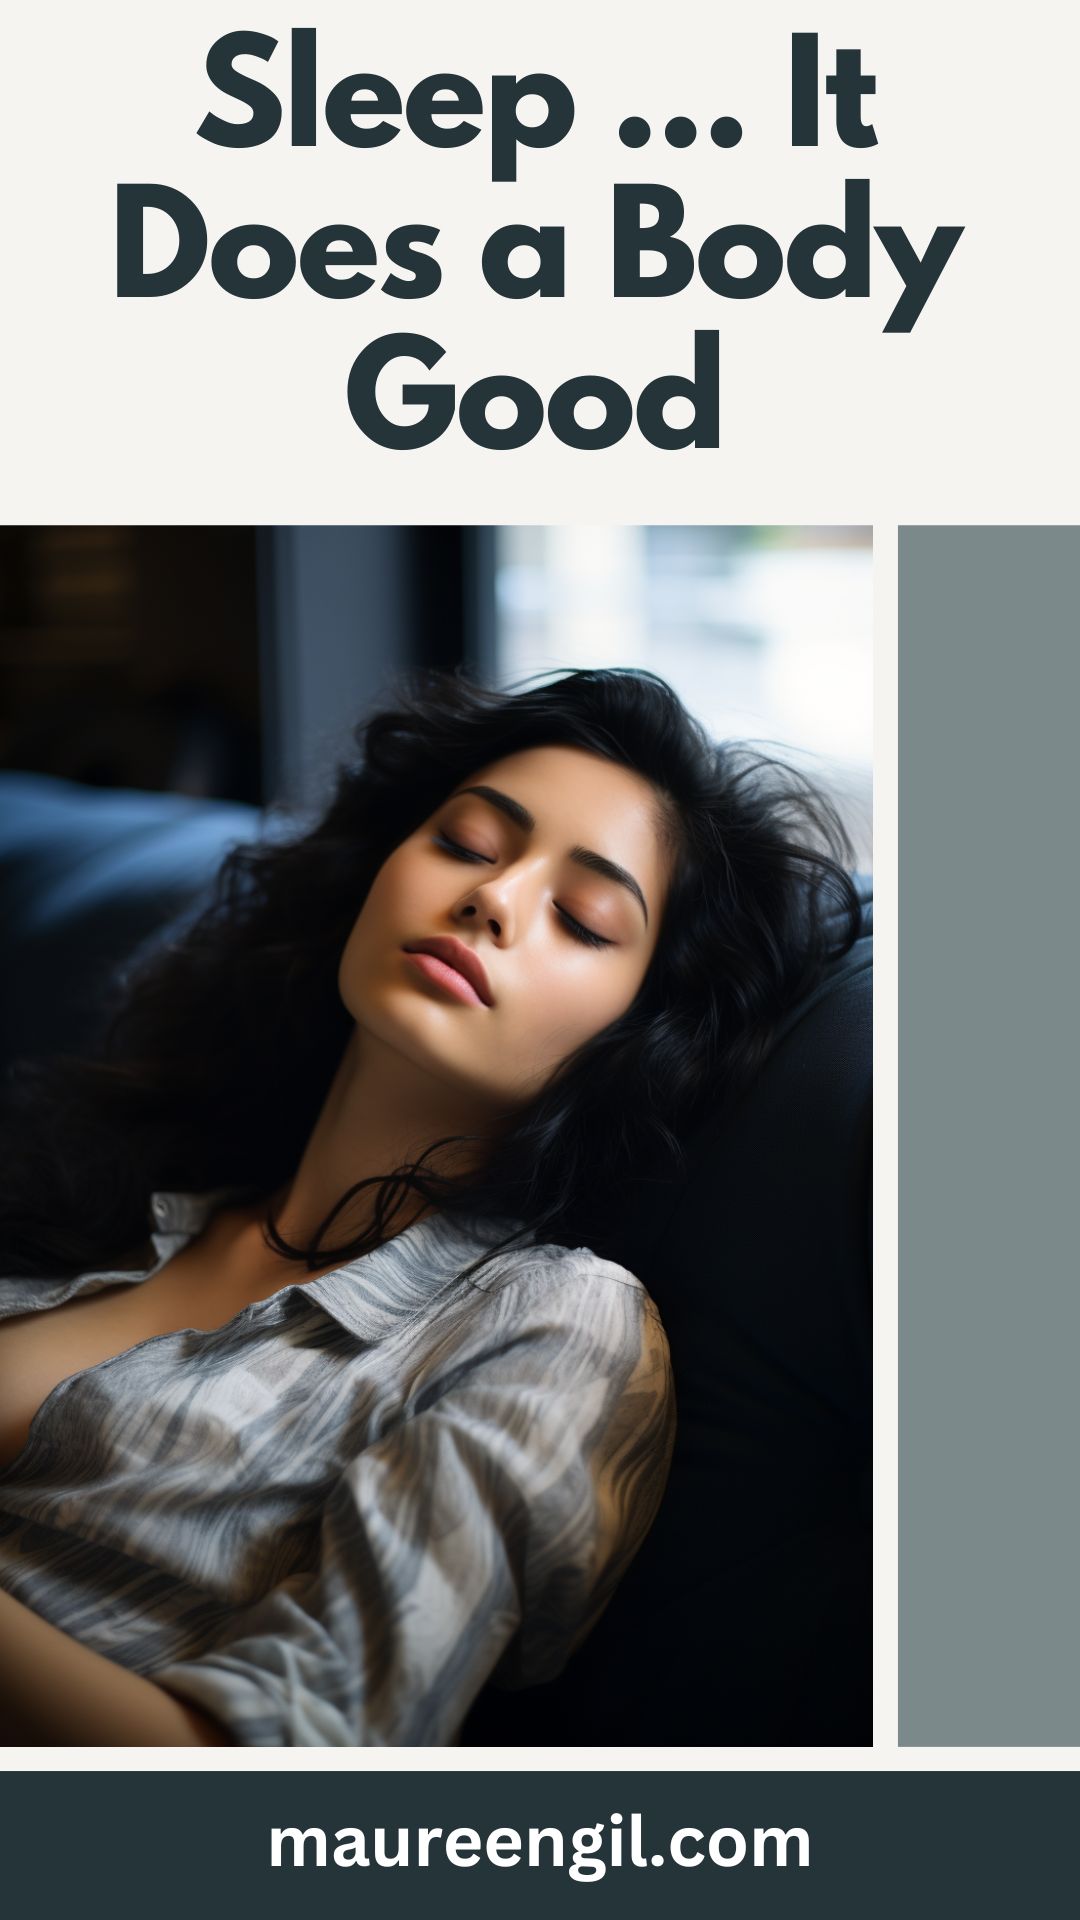 Como usar o Good Sleep 2?